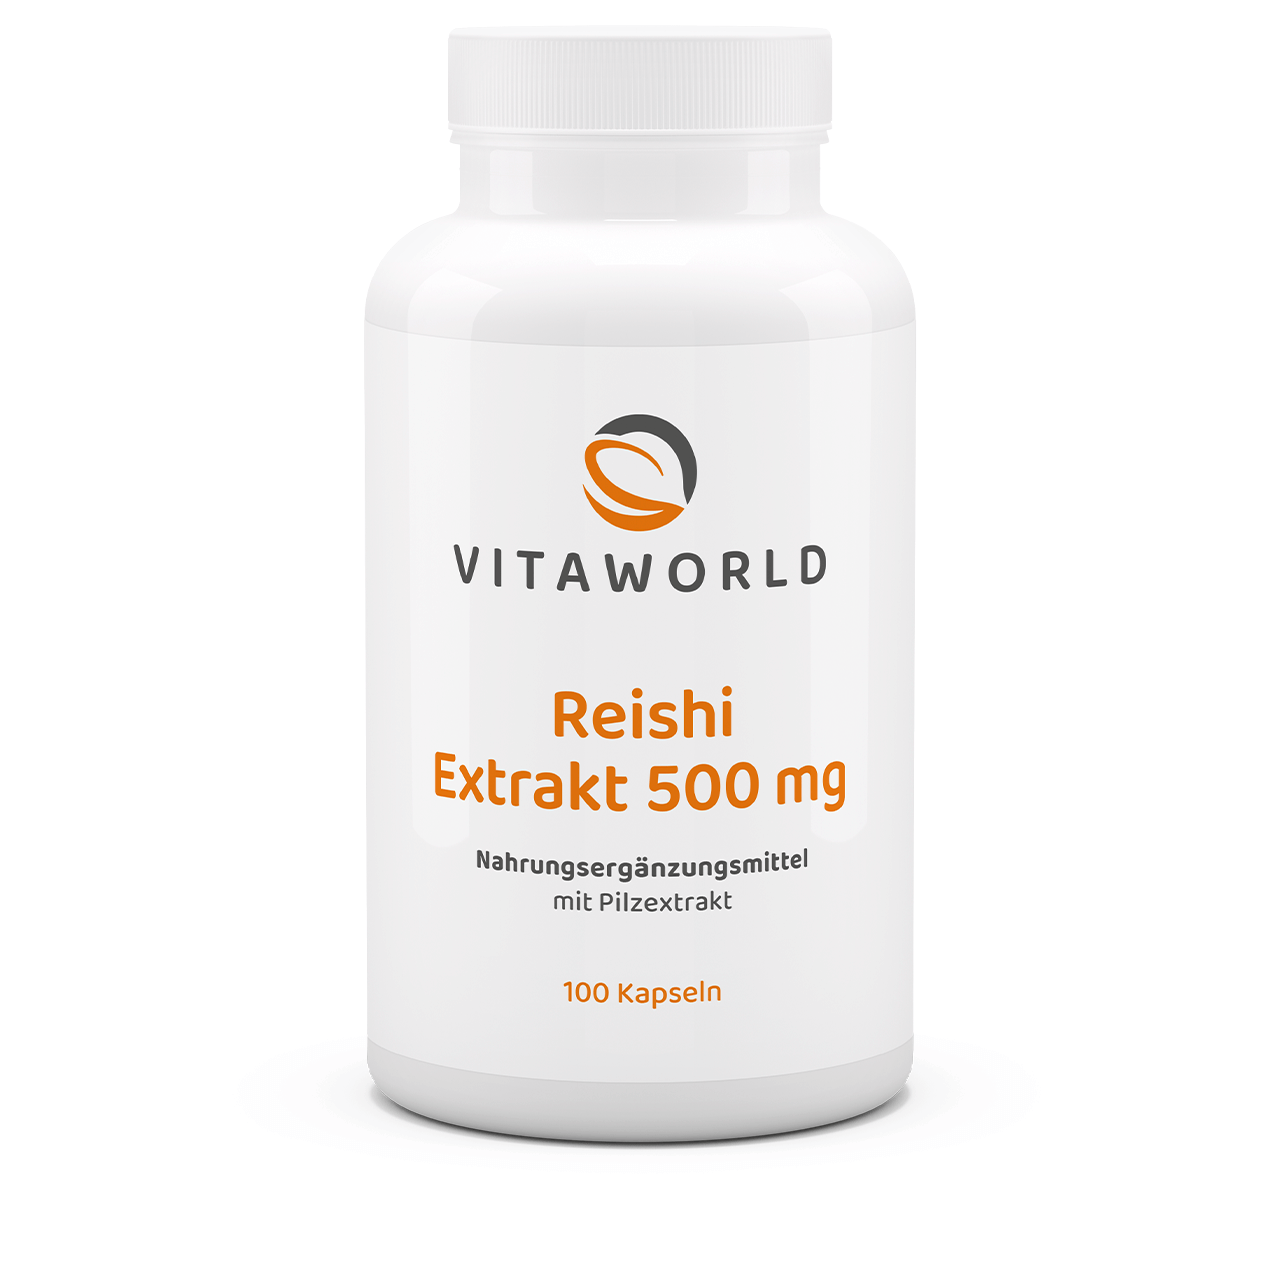 Vitaworld Reishi Extrakt 500 mg | 100 Kapseln | 1000 mg Reishi-Extrakt und 100 mg Polysaccharide pro Tagesverzehrmenge | vegan